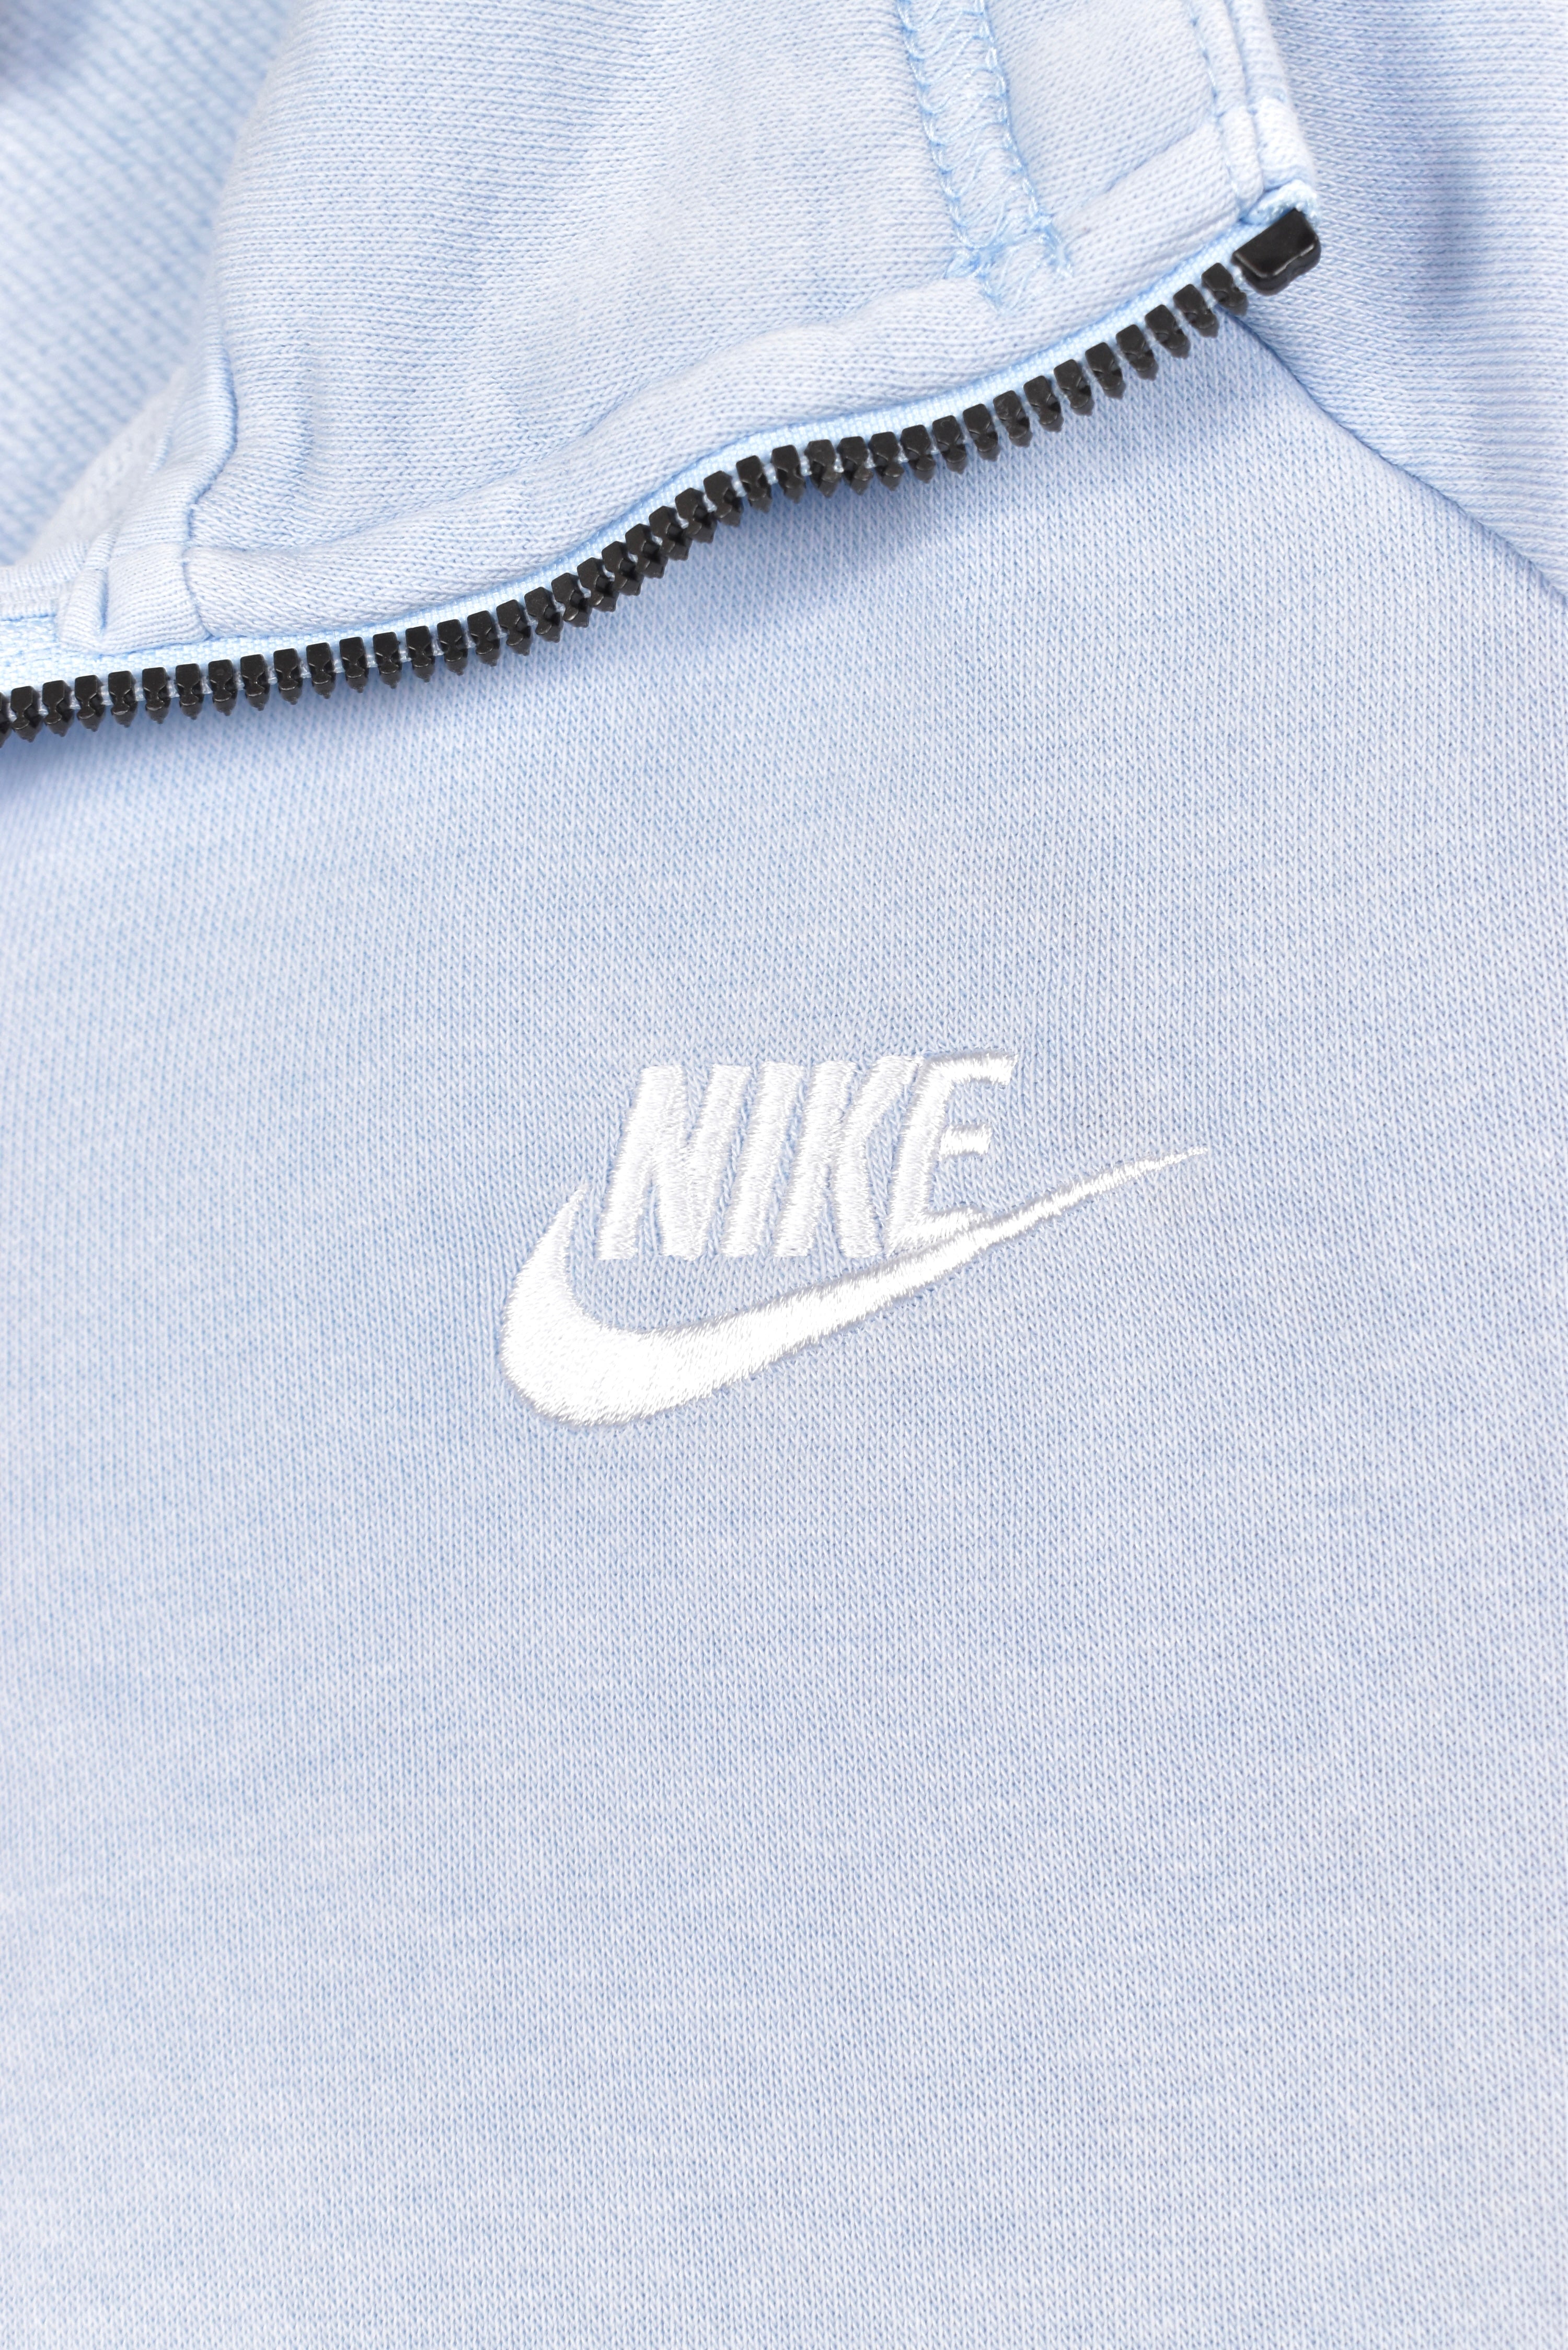 Vintage Nike sweatshirt, blue embroidered 1/4 zip jumper - AU Large NIKE